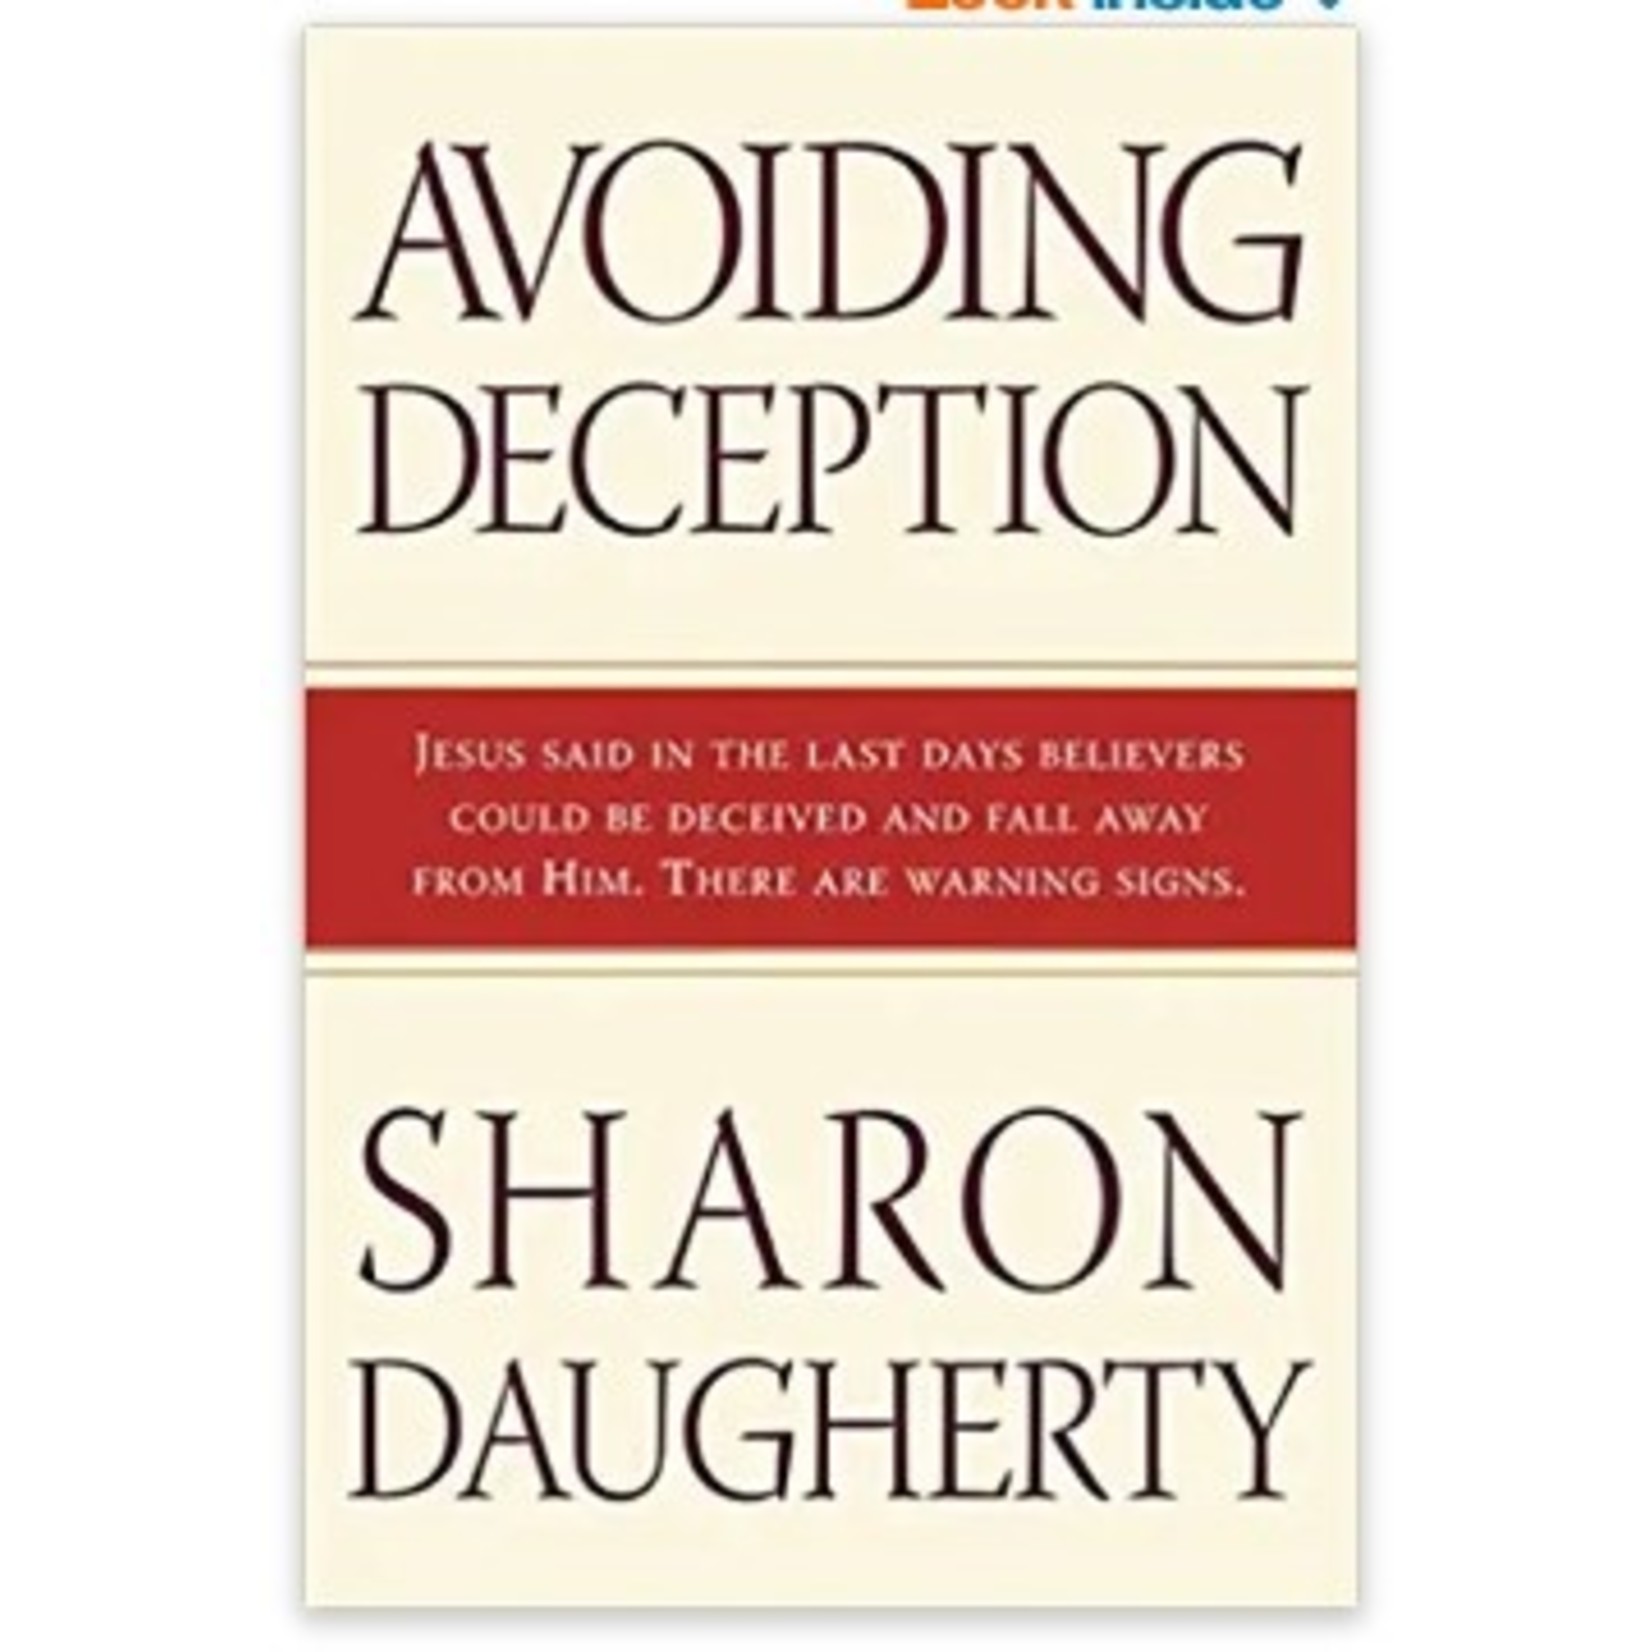 Avoiding Deception - DAUGHERTY, SHARON